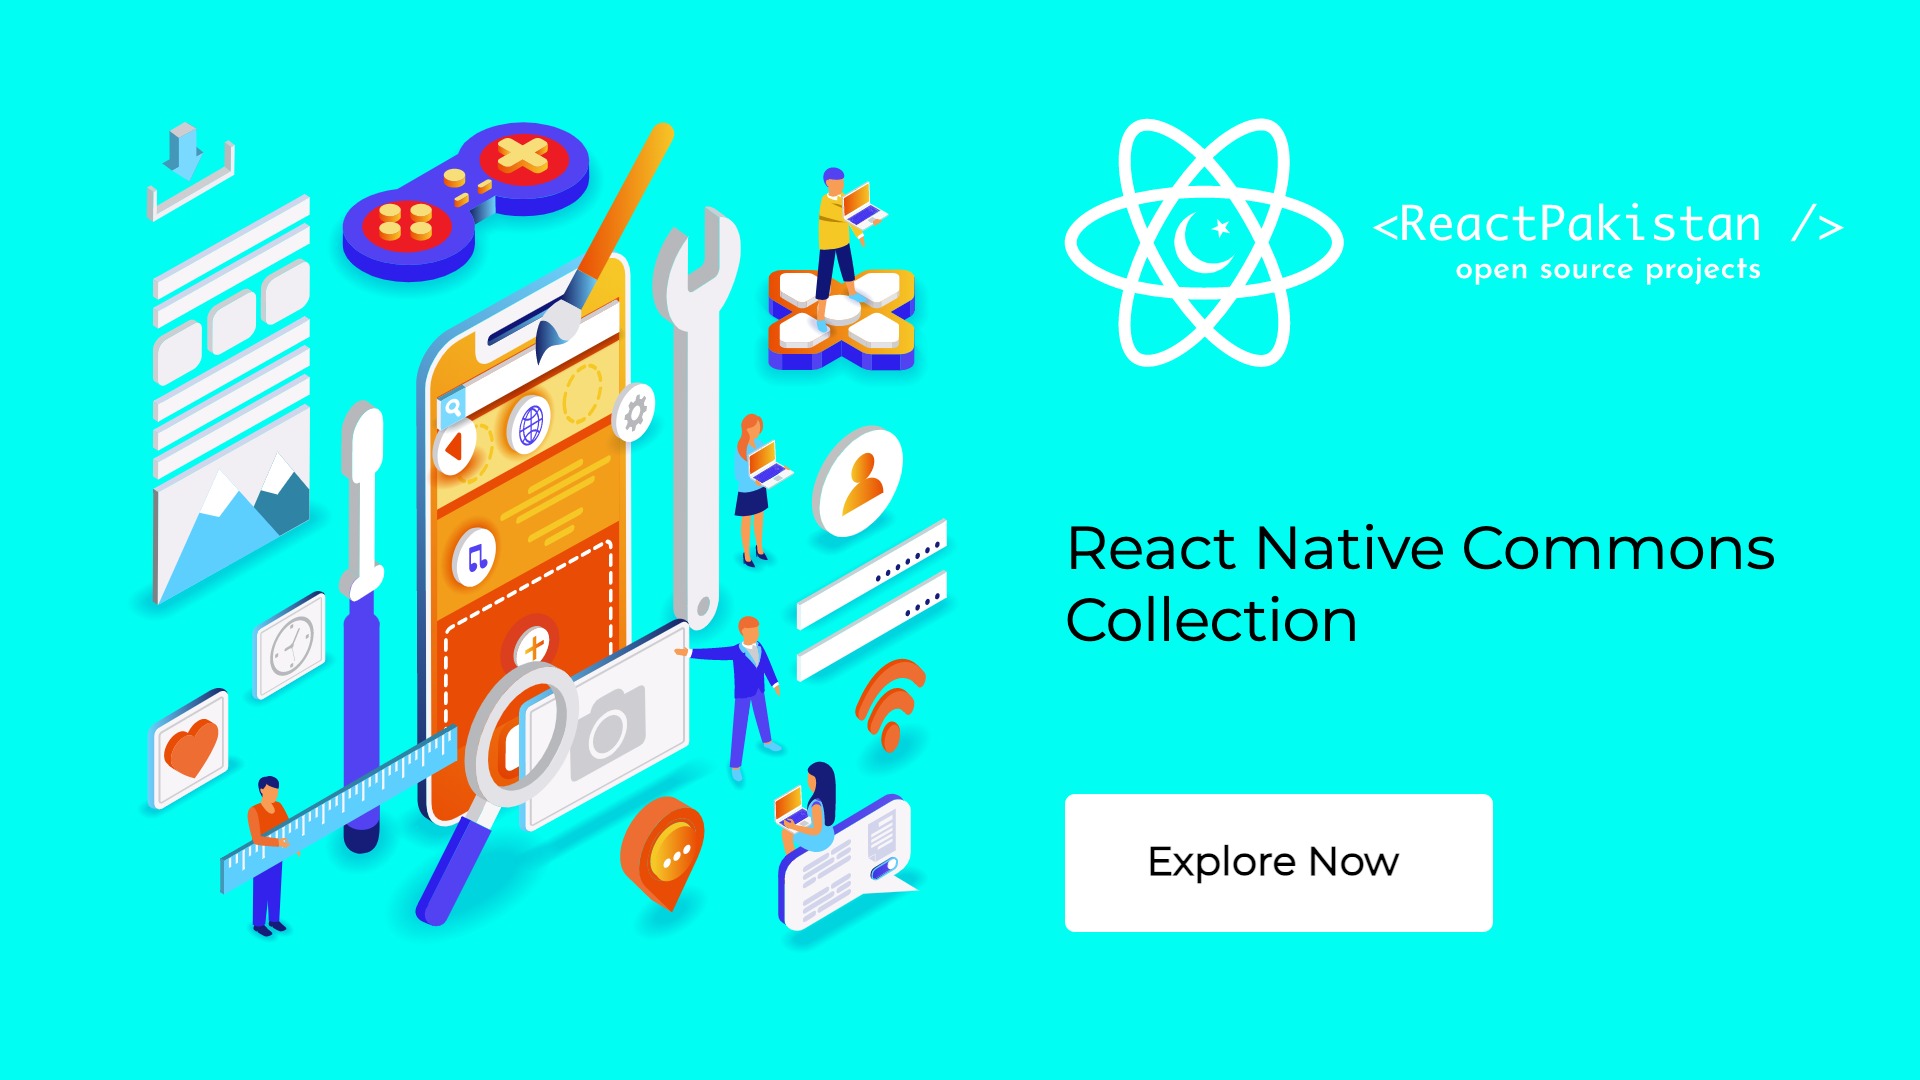 React Pakistan - React Native Commons Collection